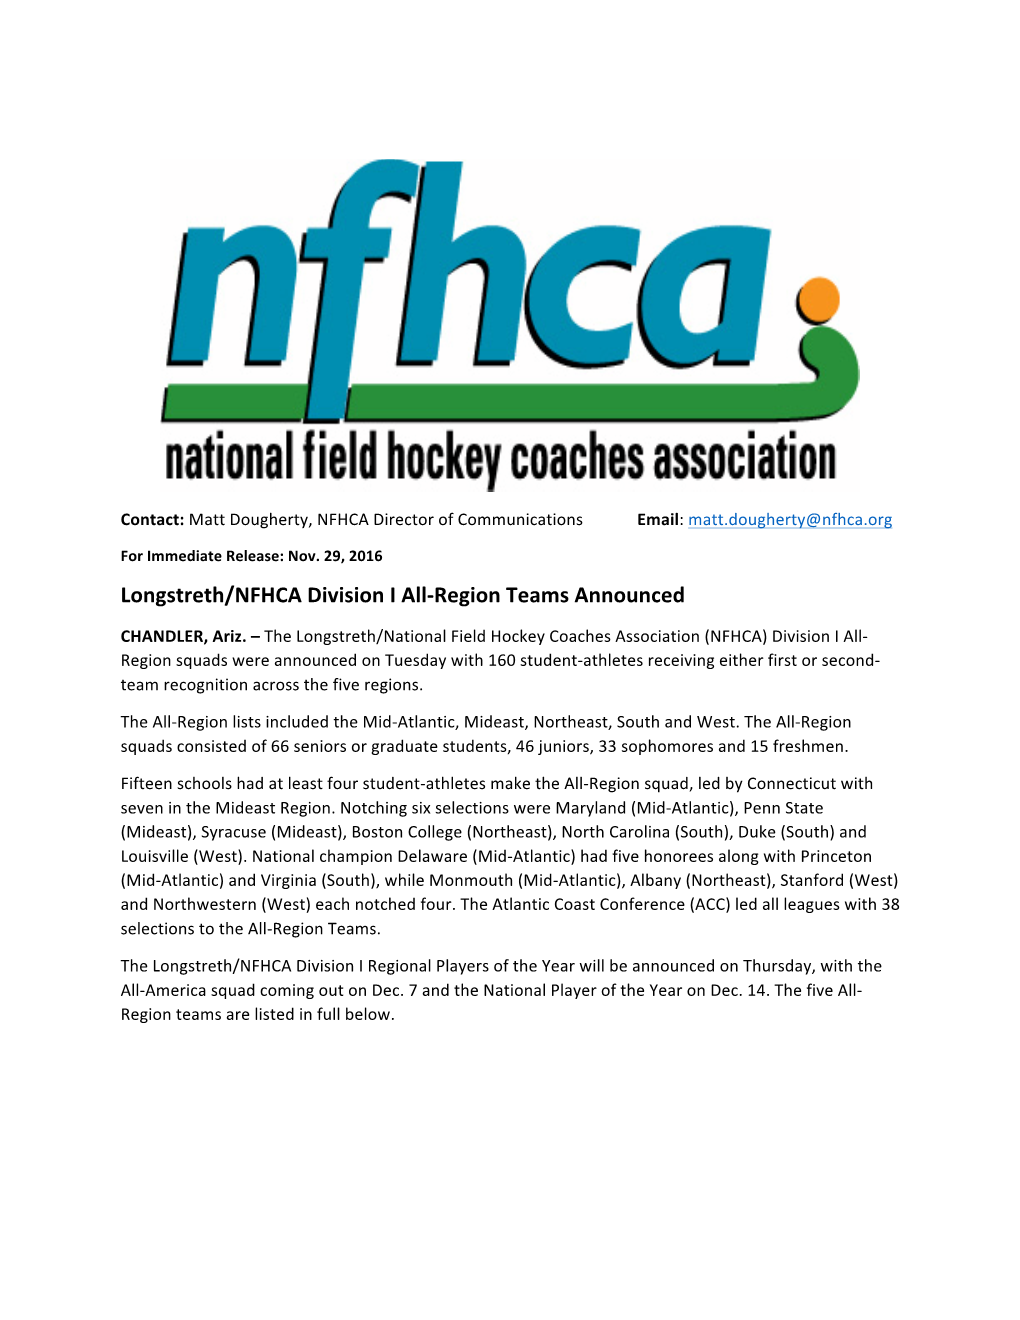 Longstreth/NFHCA Division I All-Region Teams Announced